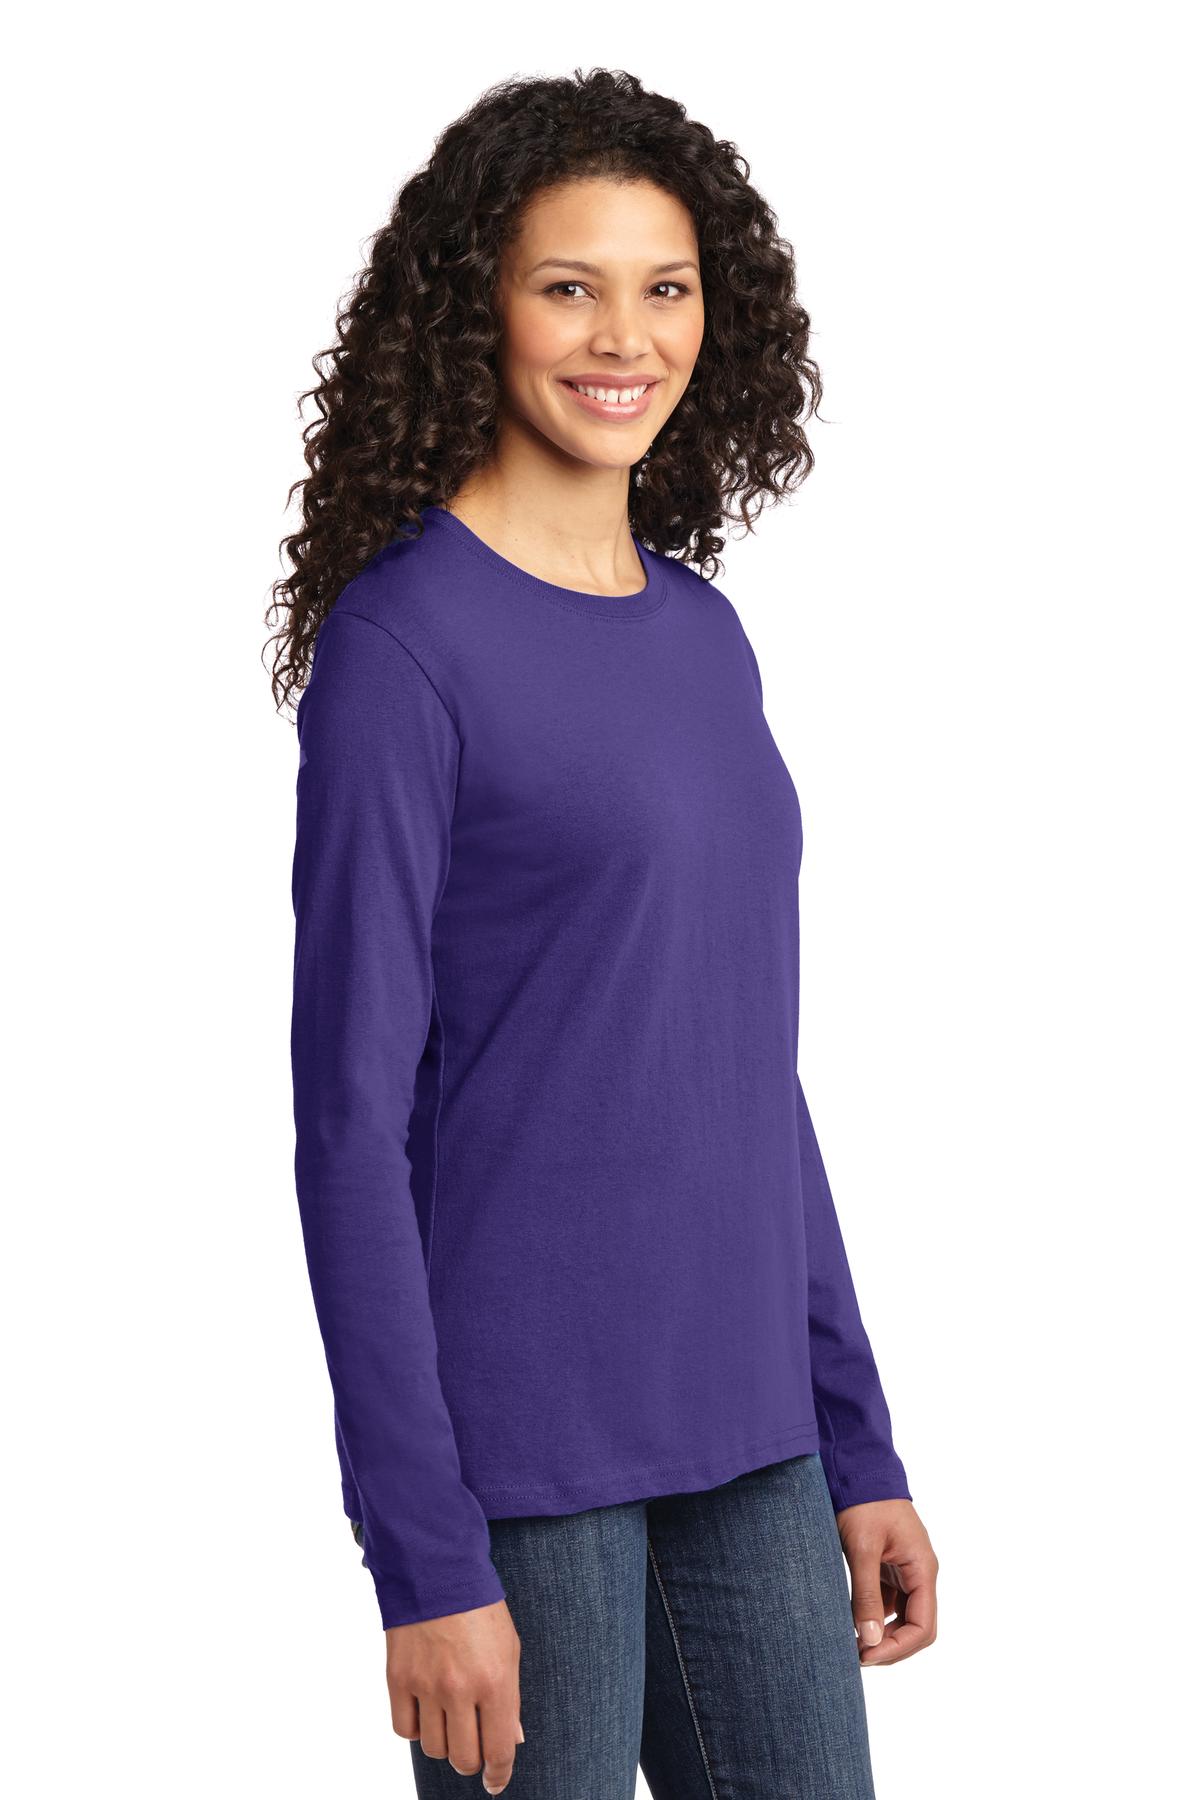 Port & Company Long Sleeve 54oz 100% Cotton TShirt (LPC54LS) Purple, XL - image 4 of 6